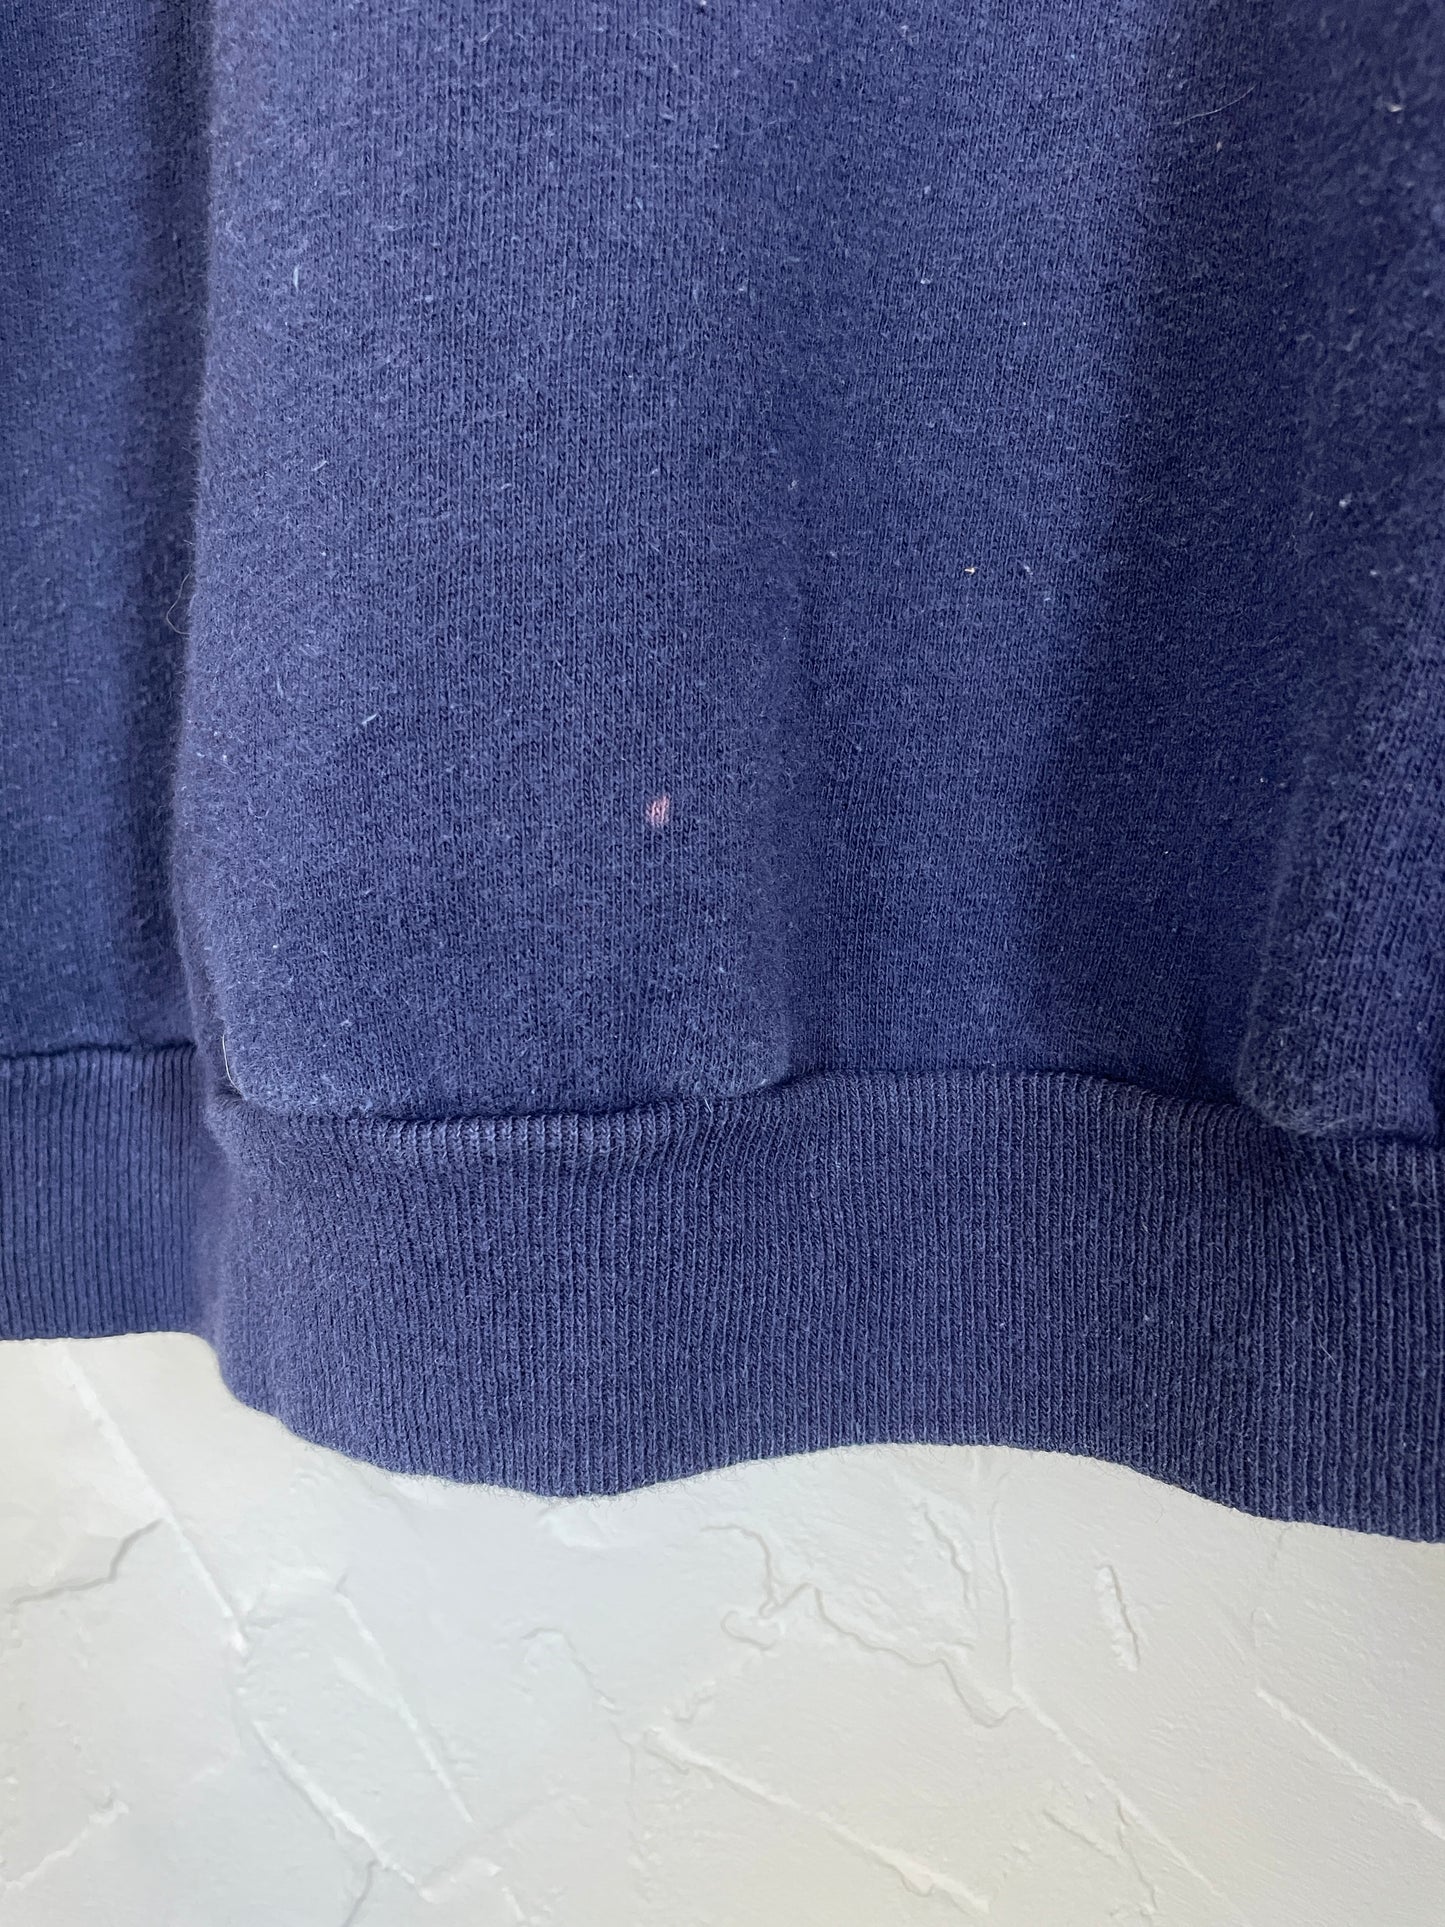 80s Blank Navy Blue Sweatshirt